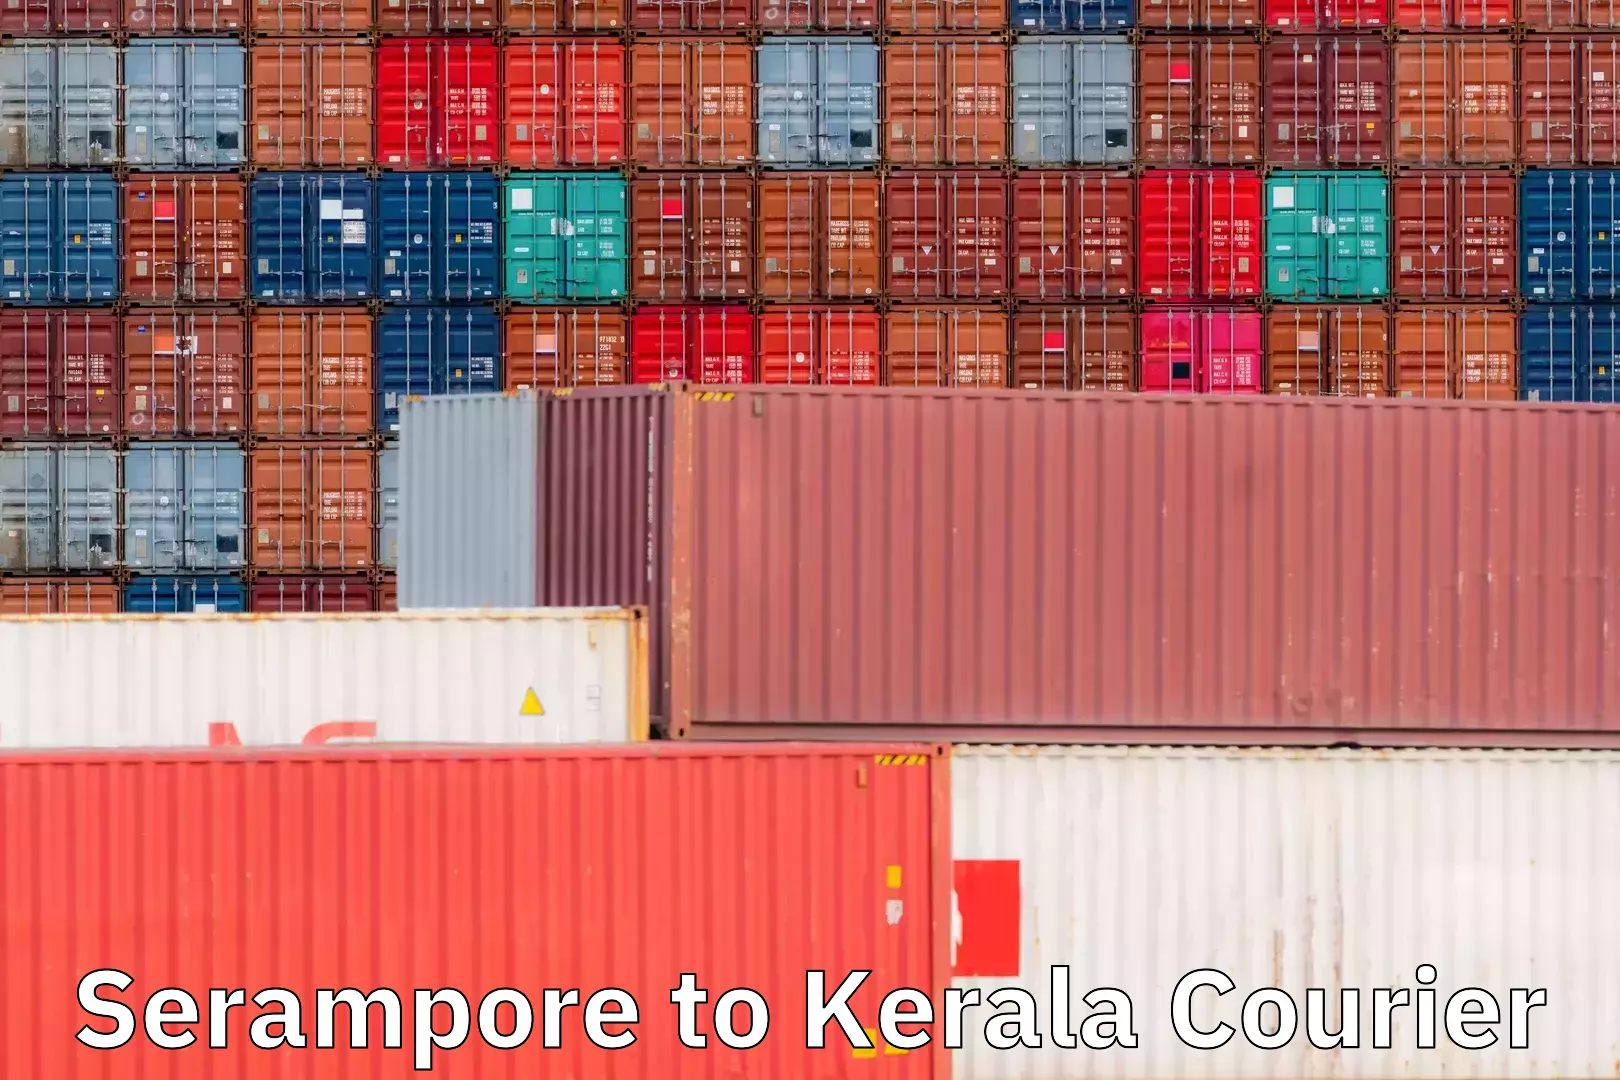 High-capacity parcel service Serampore to Kerala